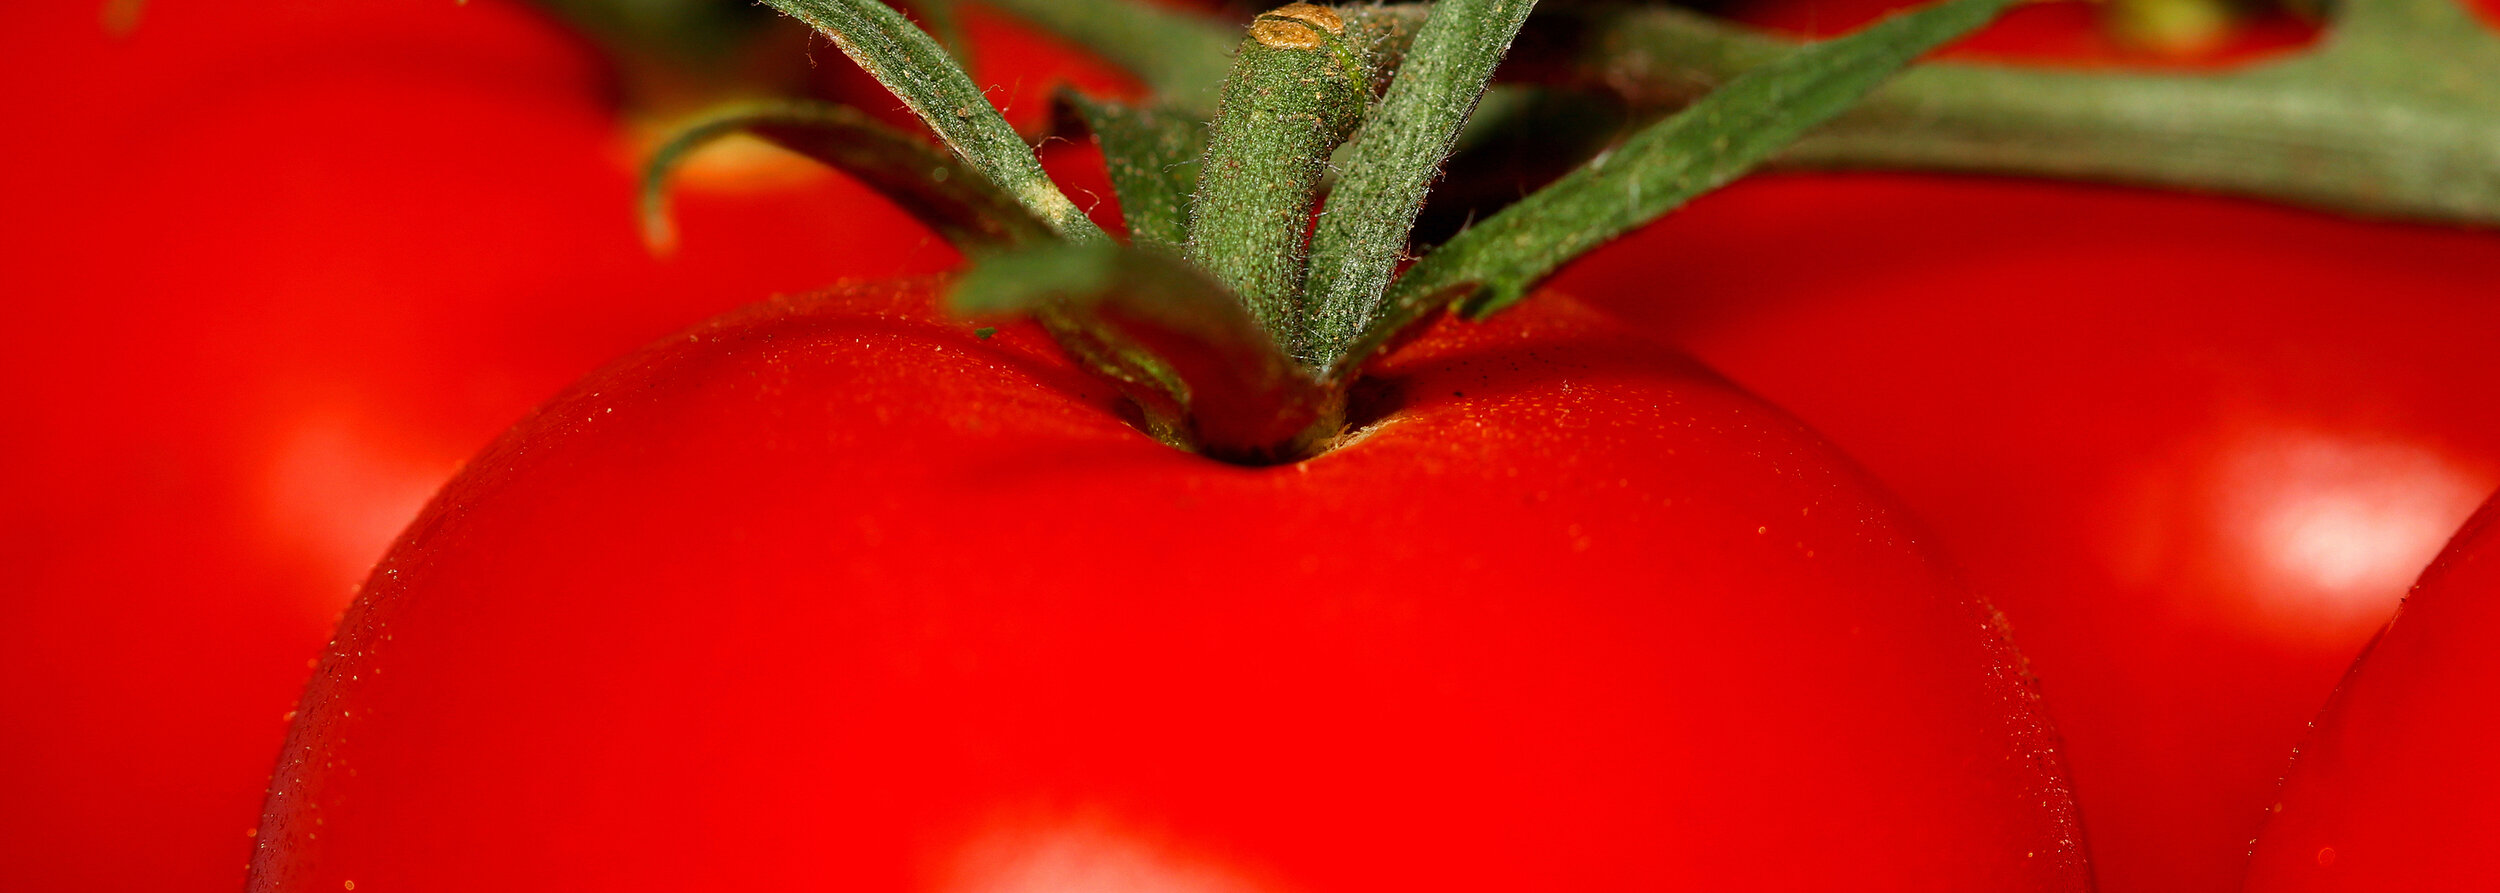 bigstock-Extreme-close-up-shot-of-Tomat-247399216.jpg